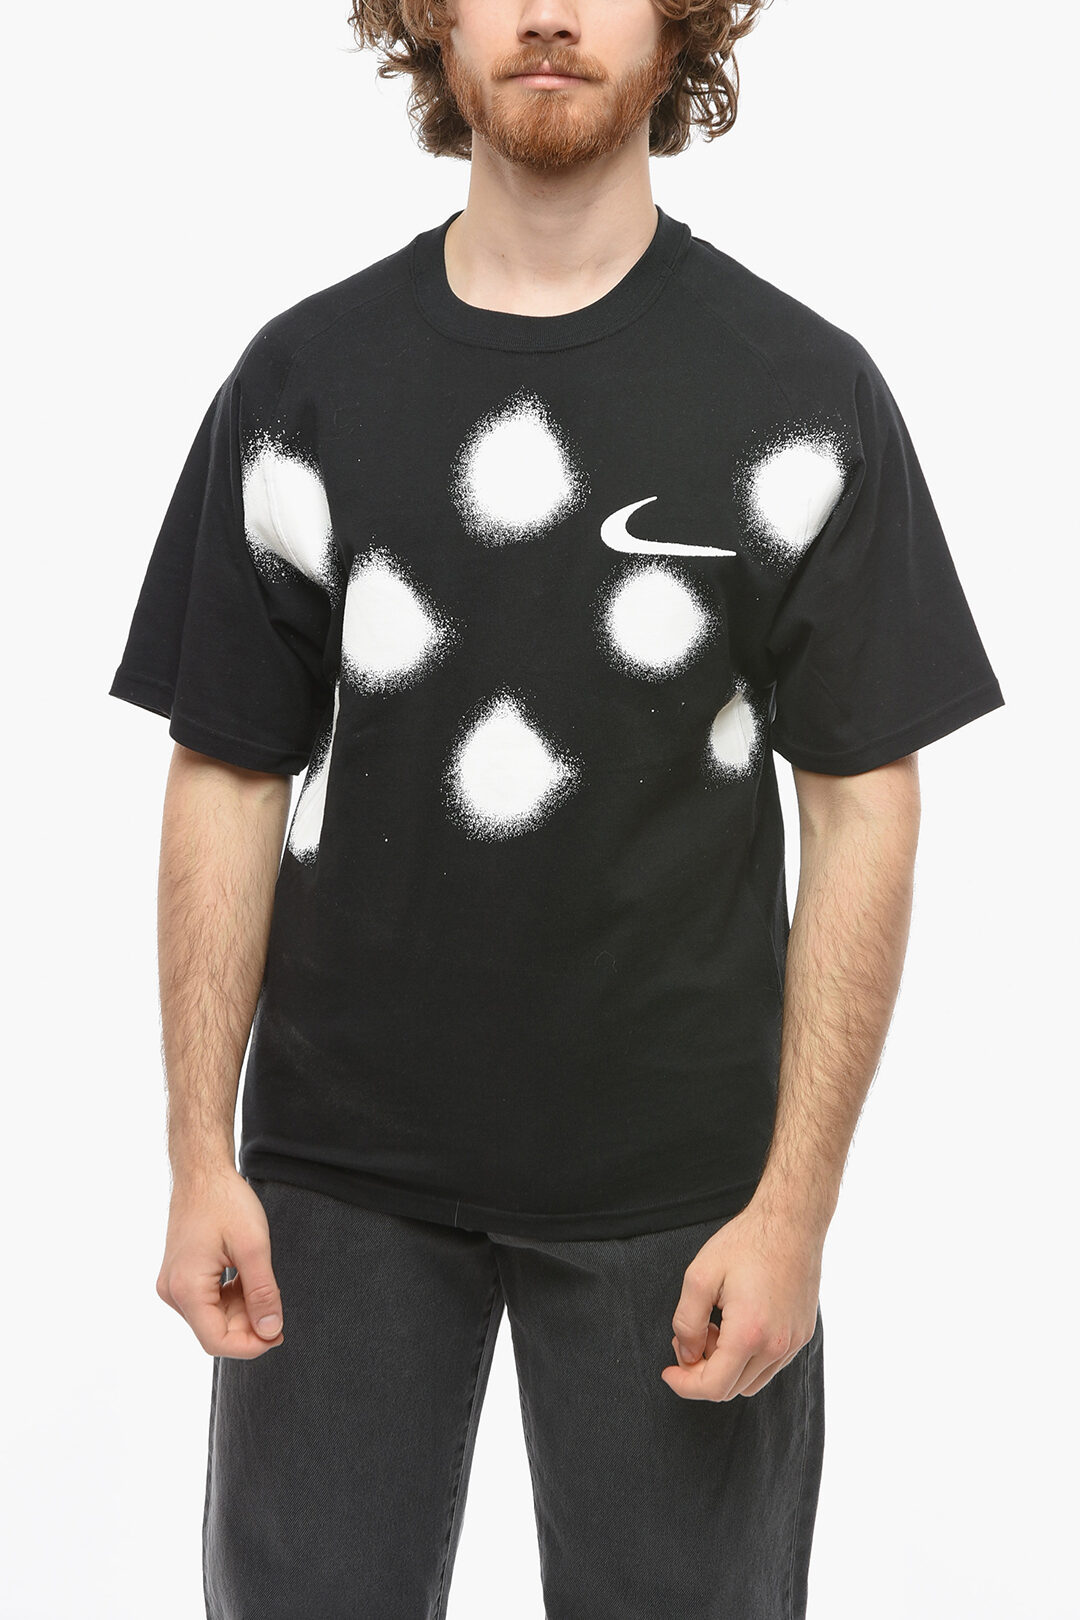 NIKE X OFF-WHITE Spray Printed Effect Crew-Neck T-shirt